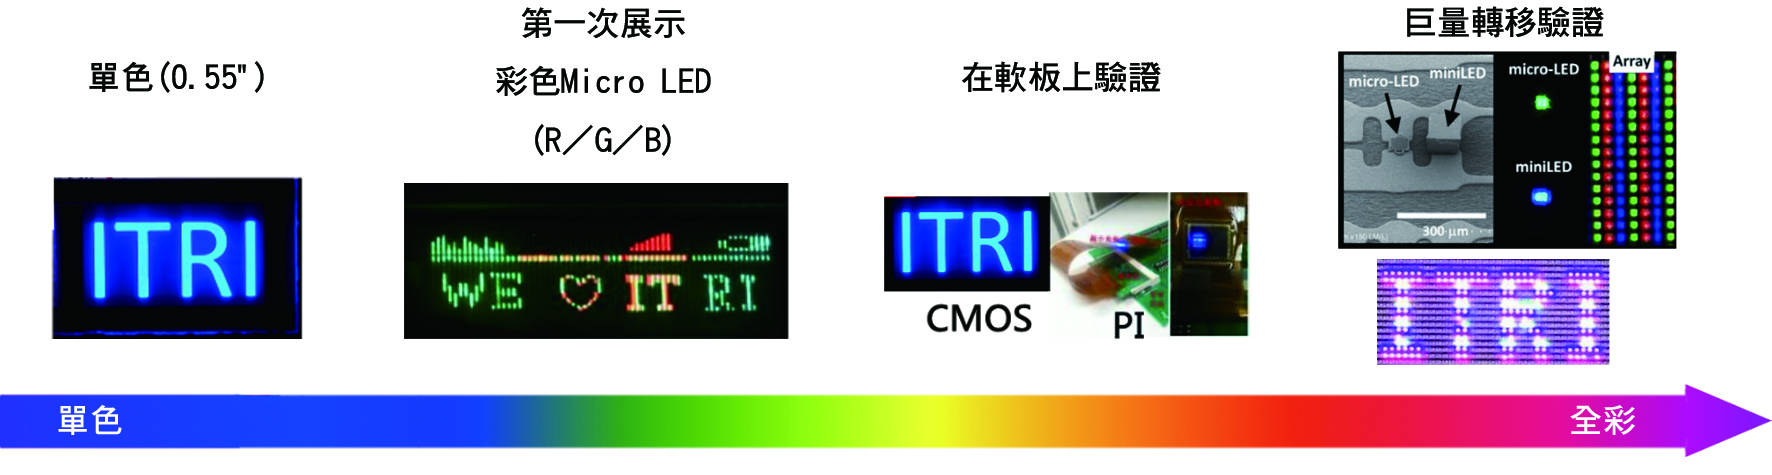 Micro LED技術之發展歷程